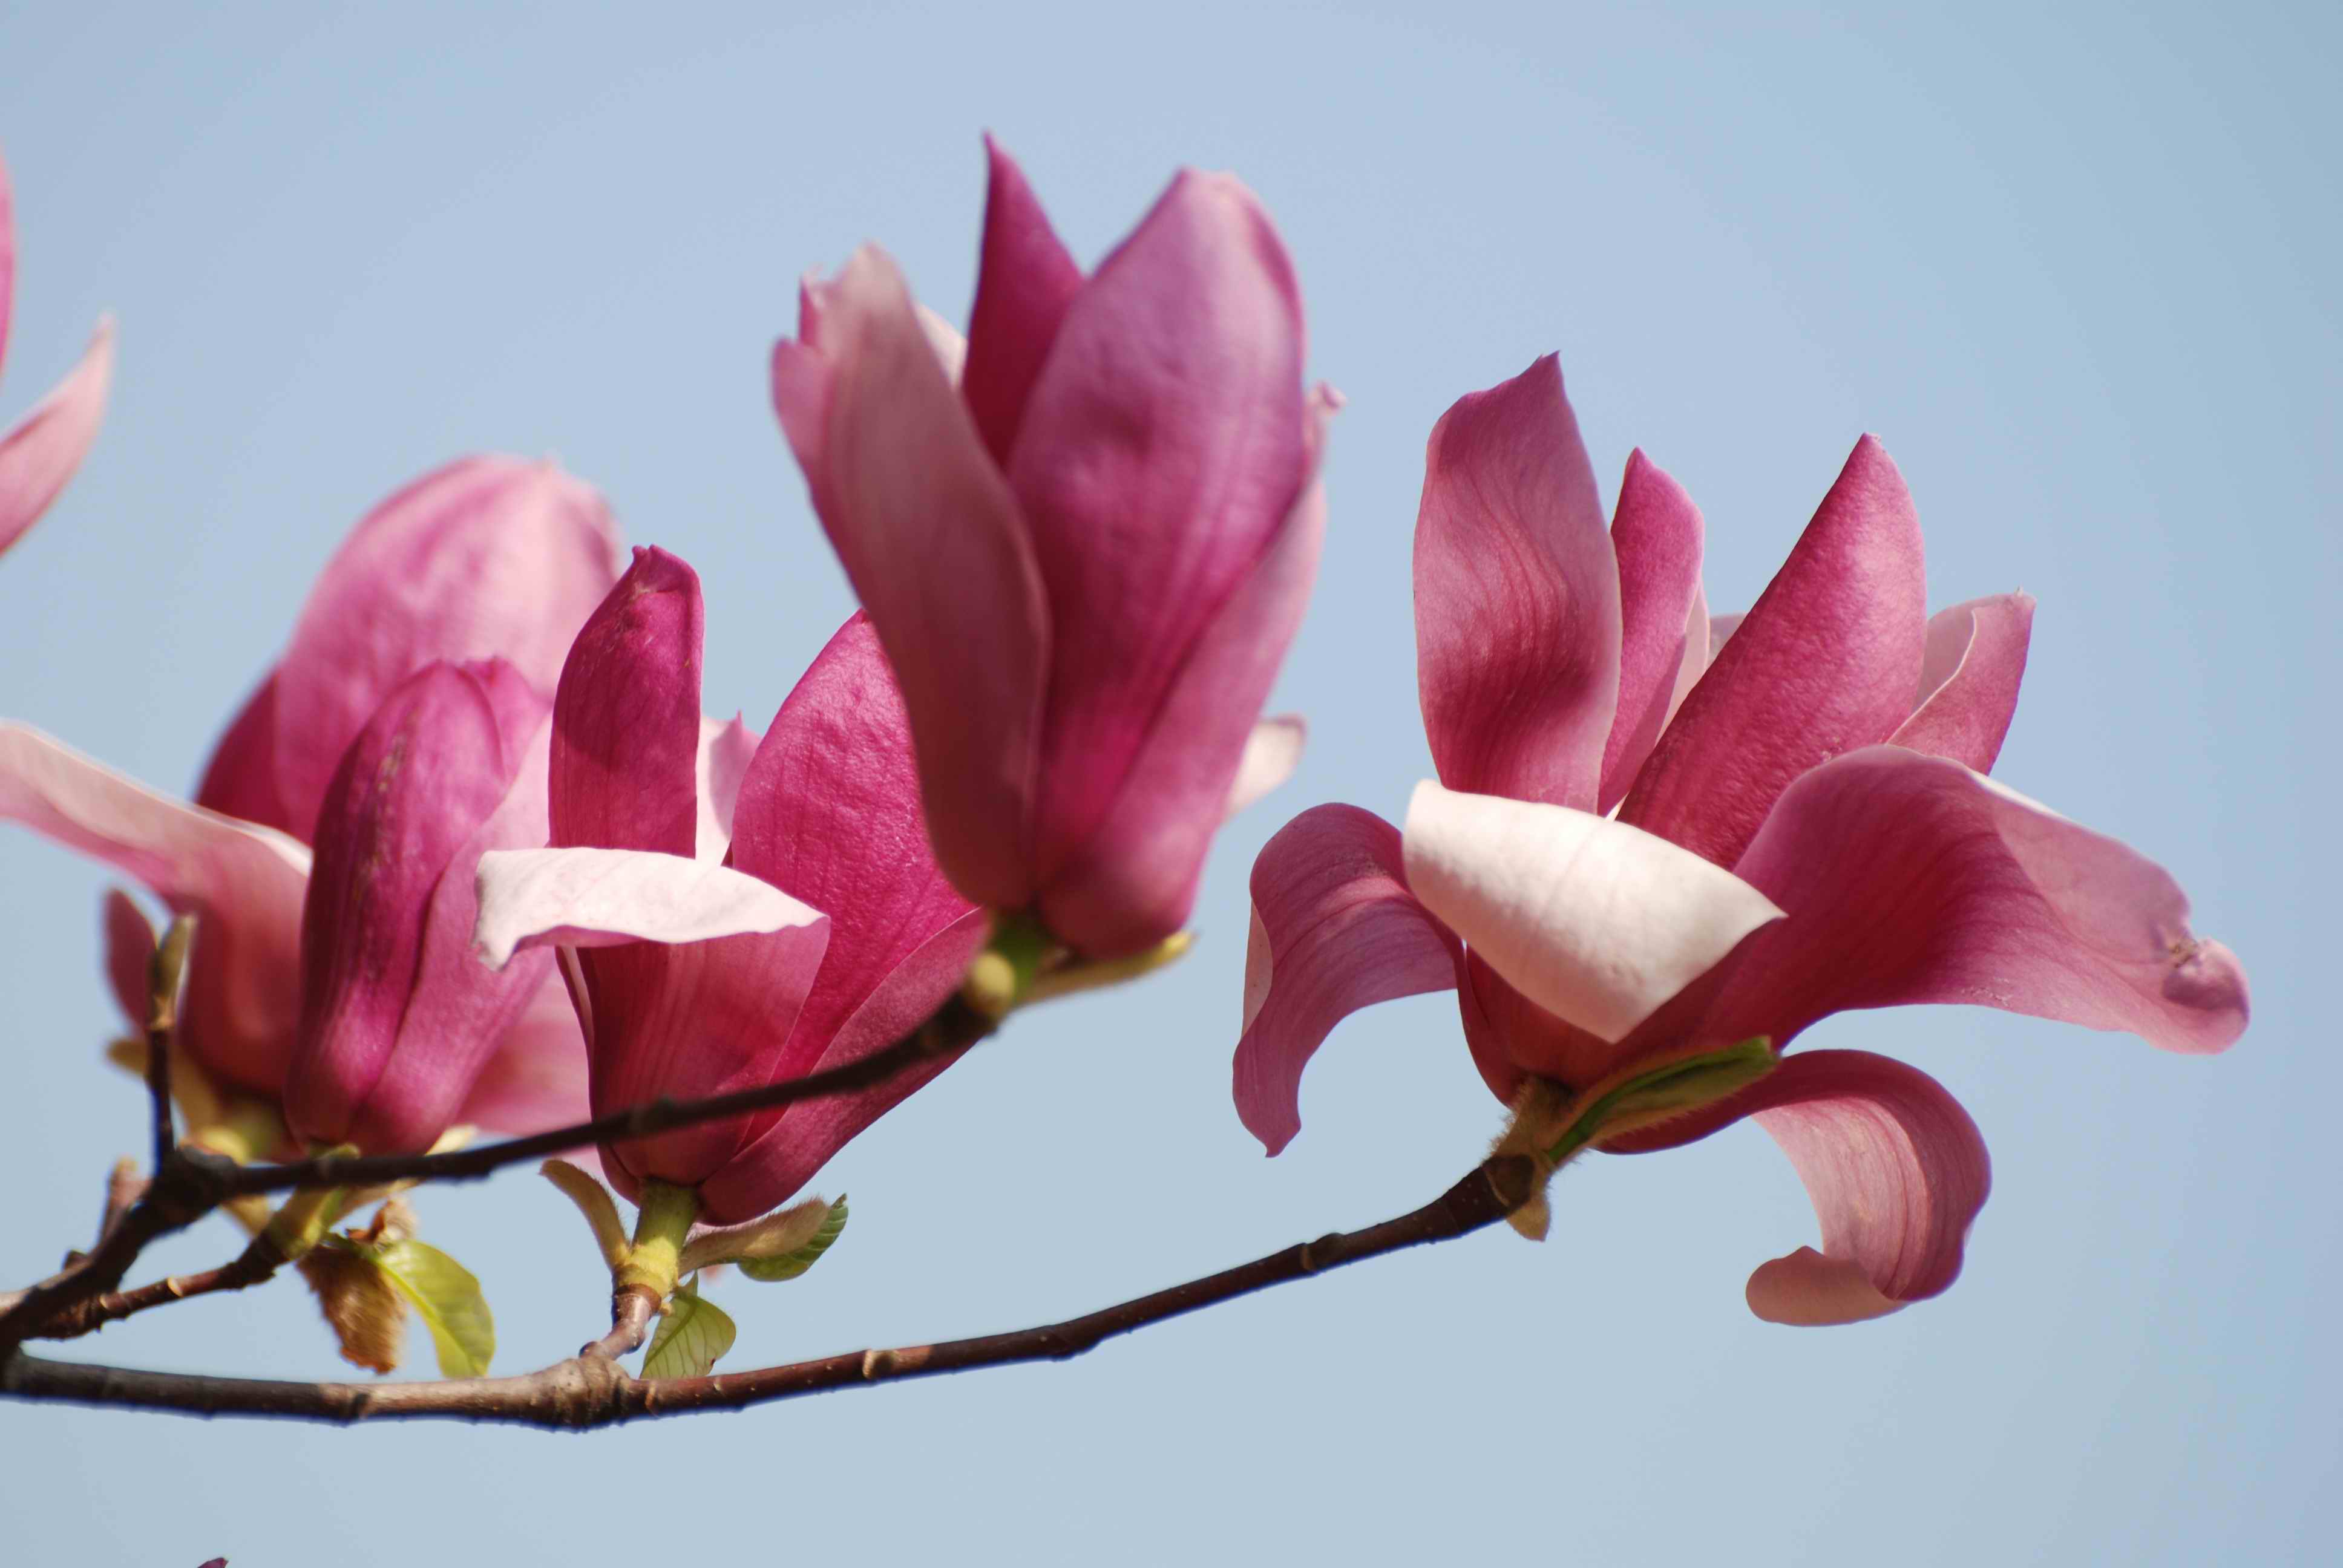 Free Images : branch, sky, sweet, petal, bloom, produce, lush, romance ...